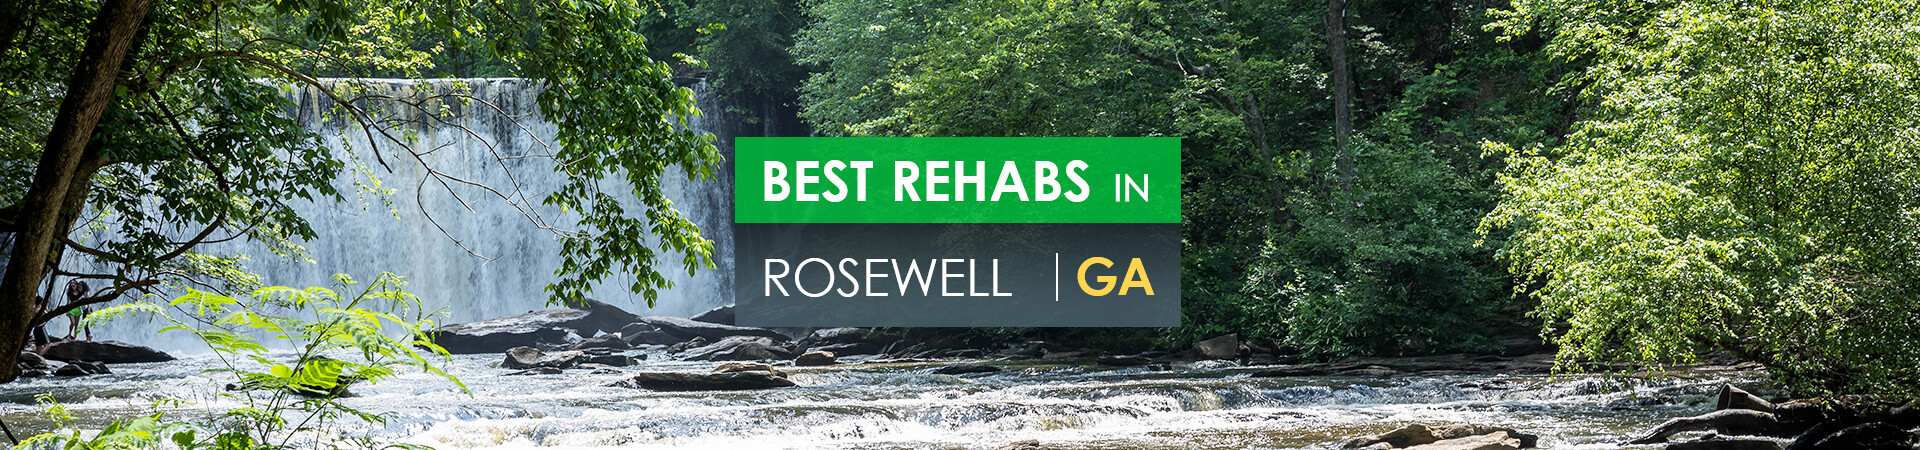 Best rehabs in Rosewell, GA